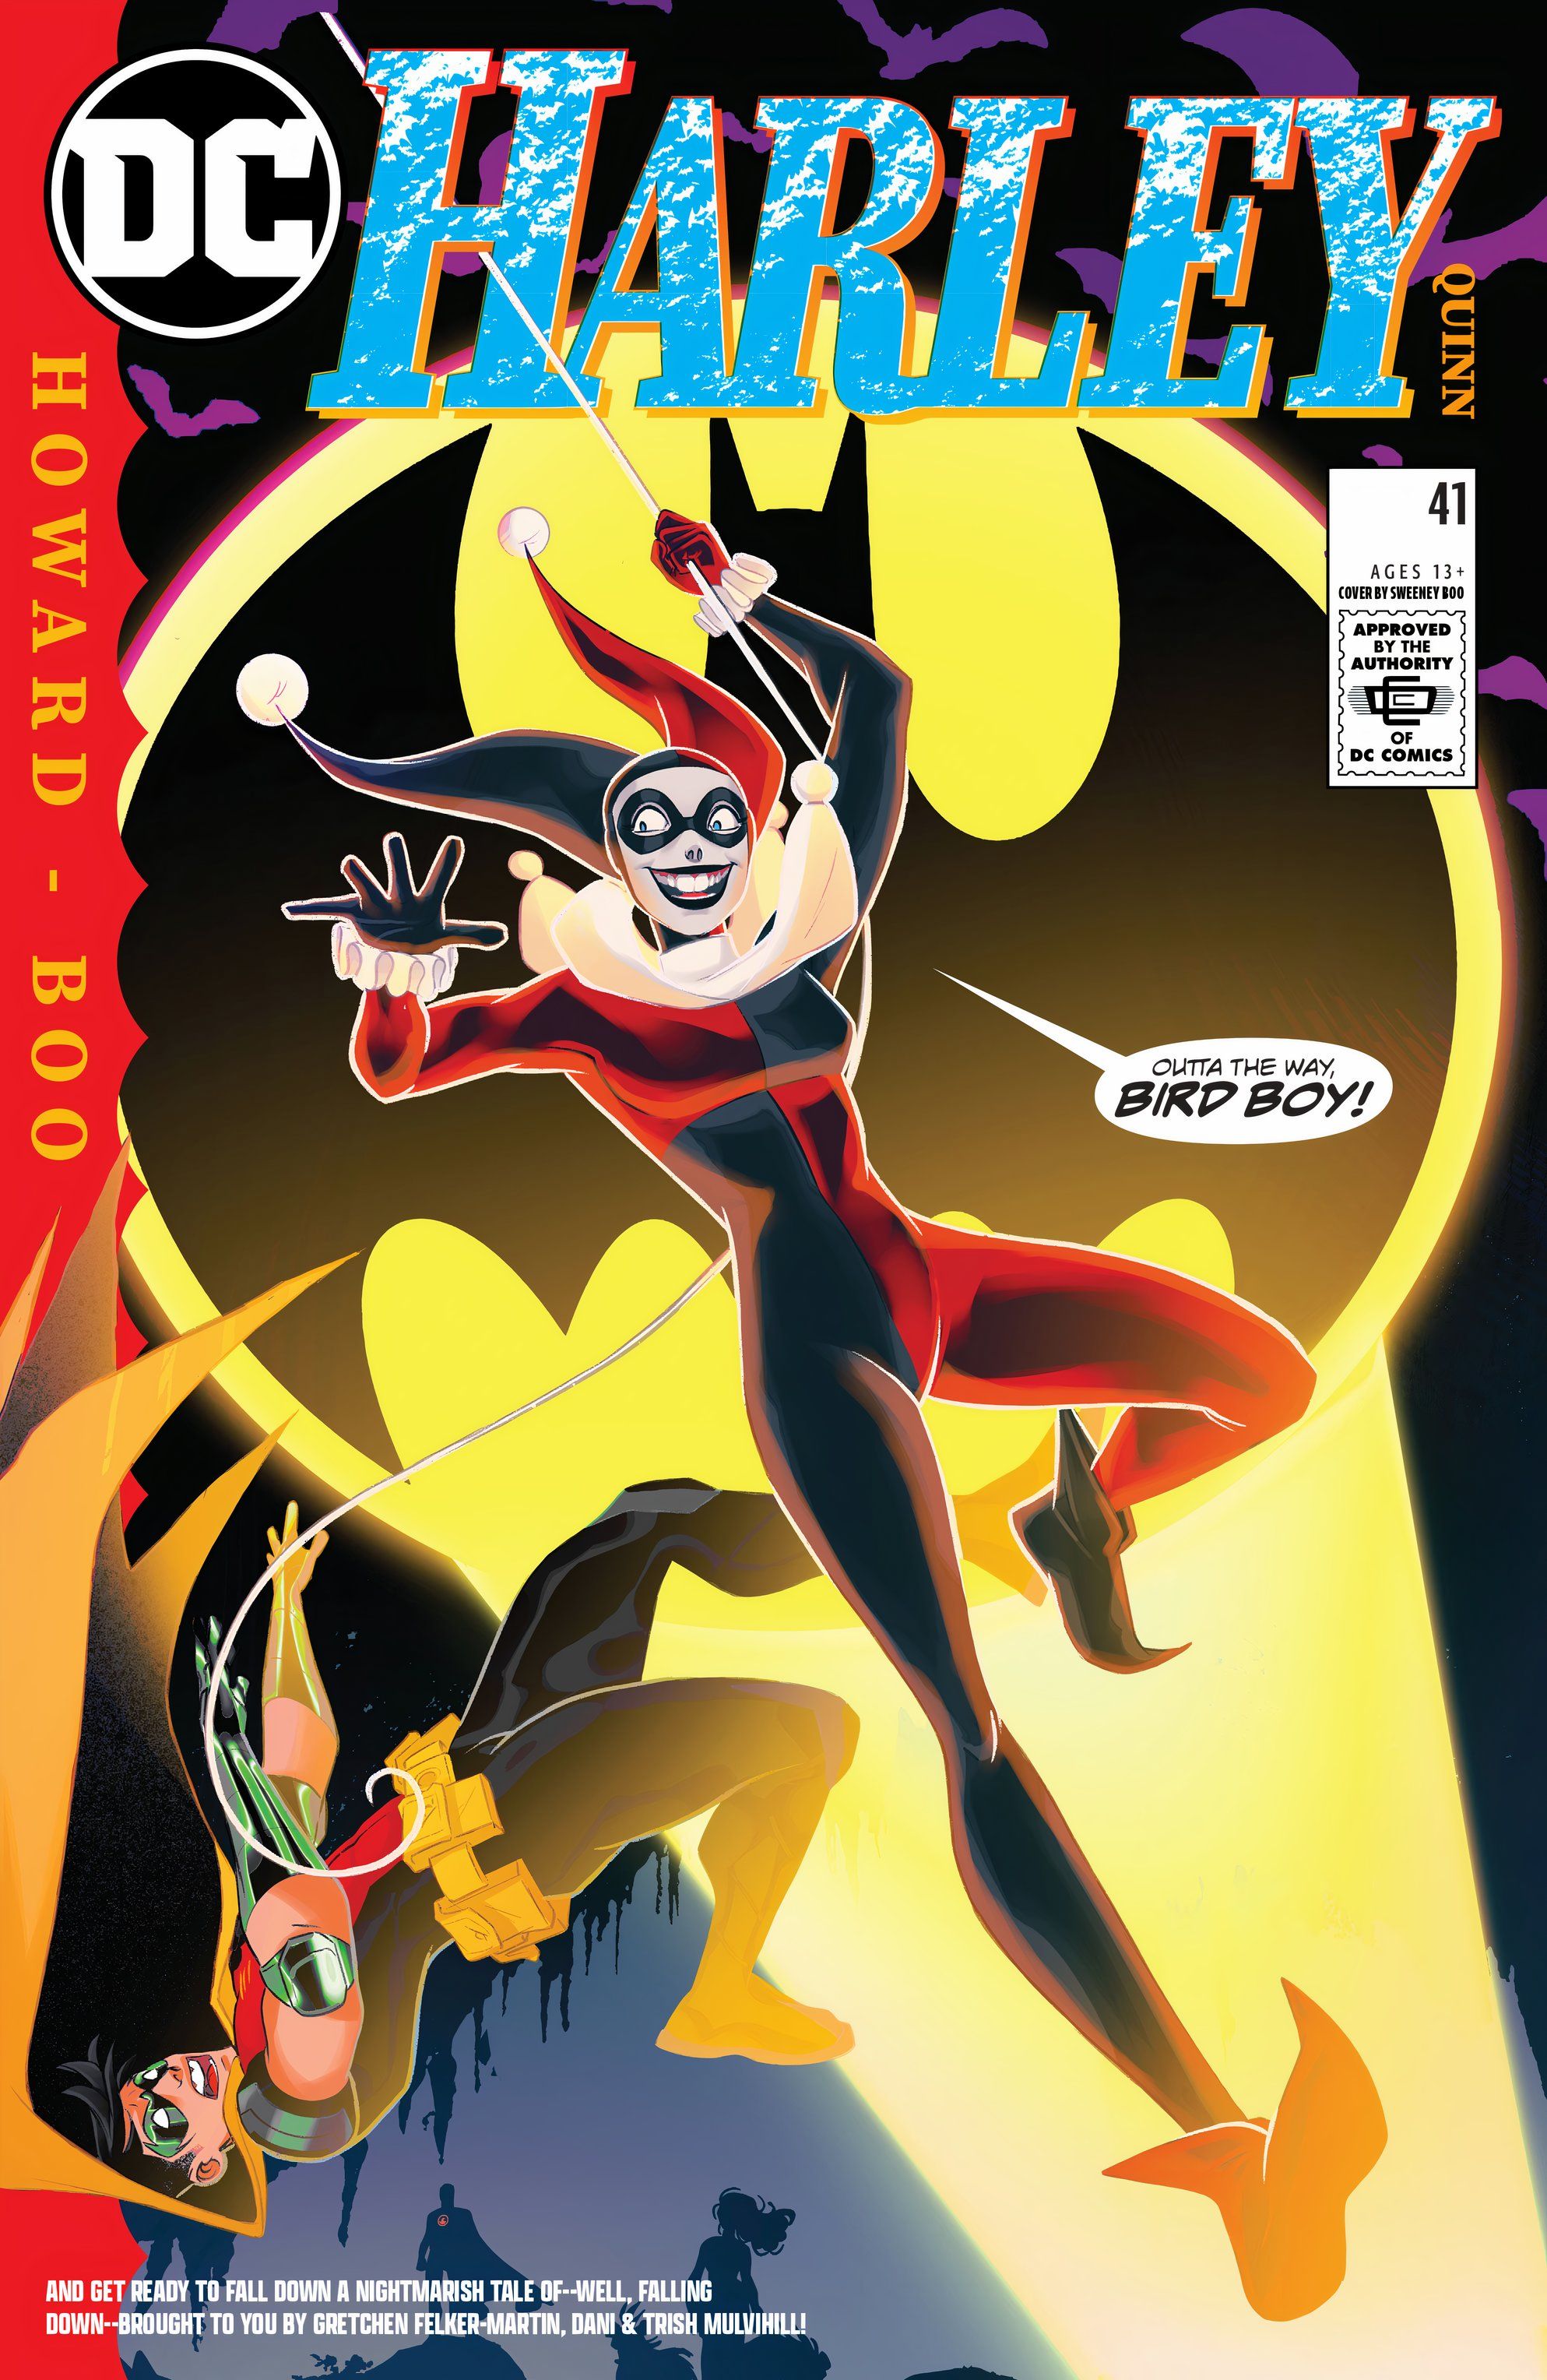 Harley Quinn 41 Capa principal: Harley Quinn saltando na frente do Bat-Símbolo, derrubando Robin Tim Drake.